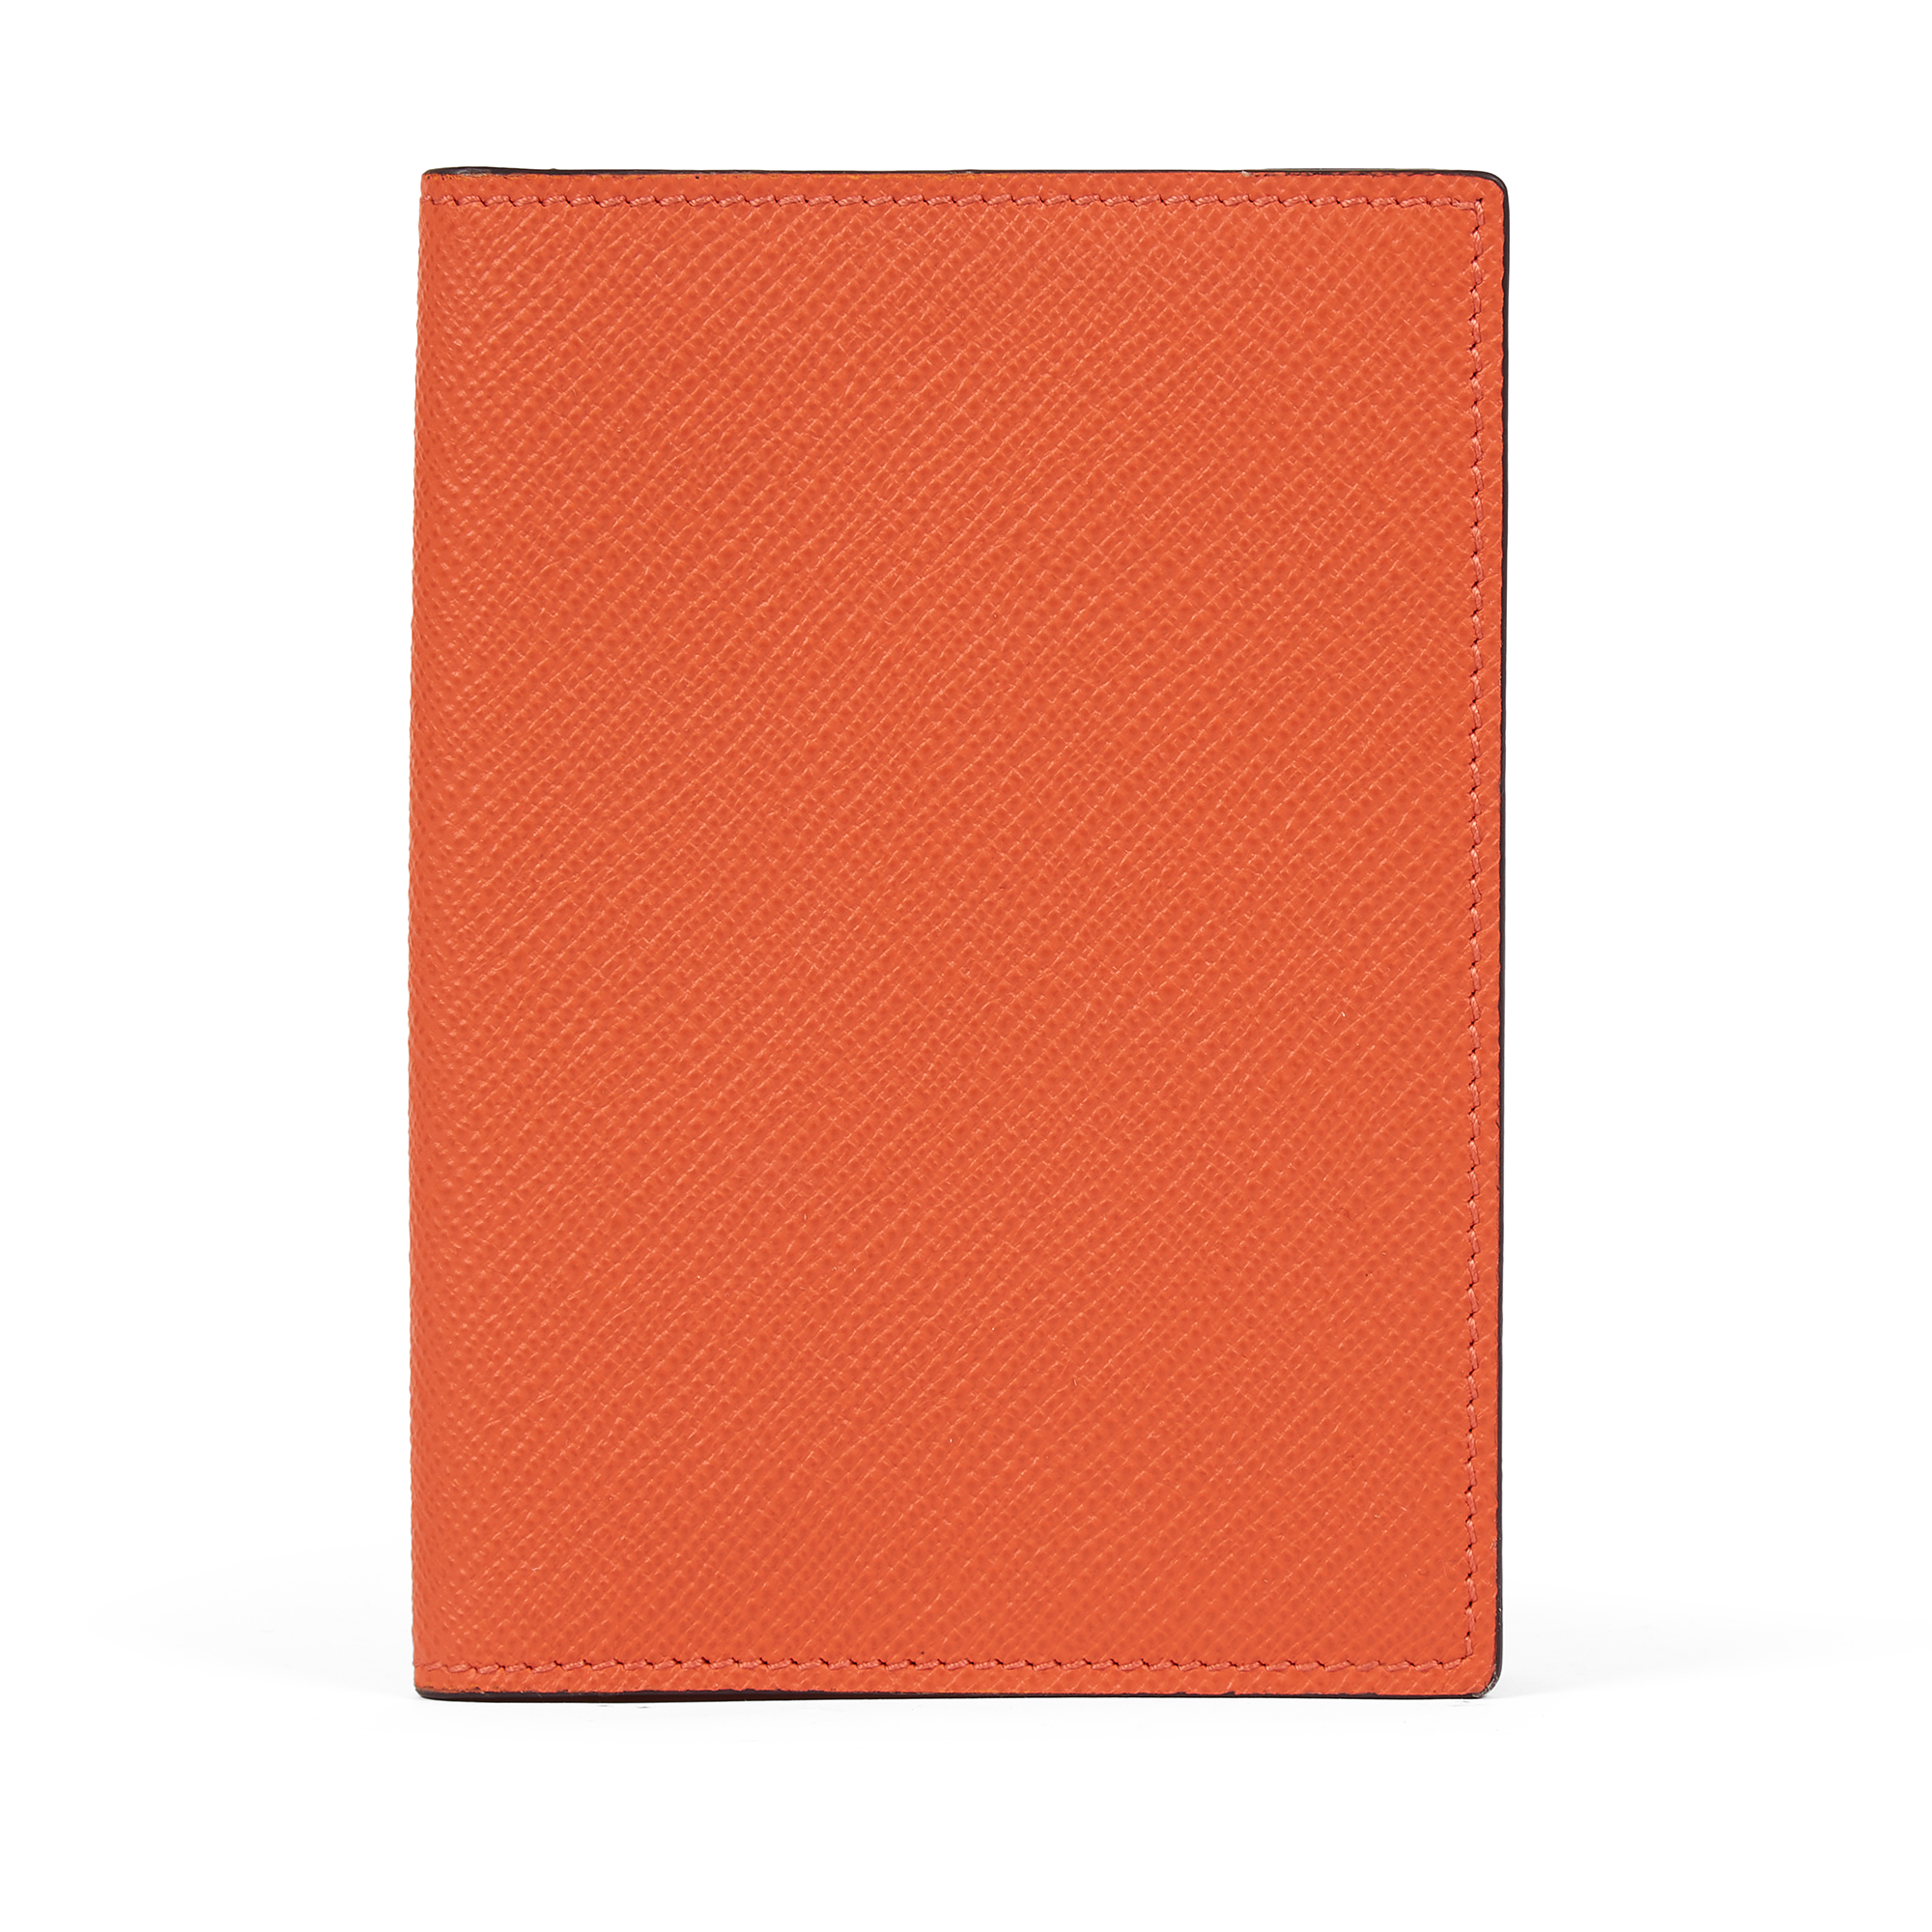 Smythson Passport Cover In Panama In Orange